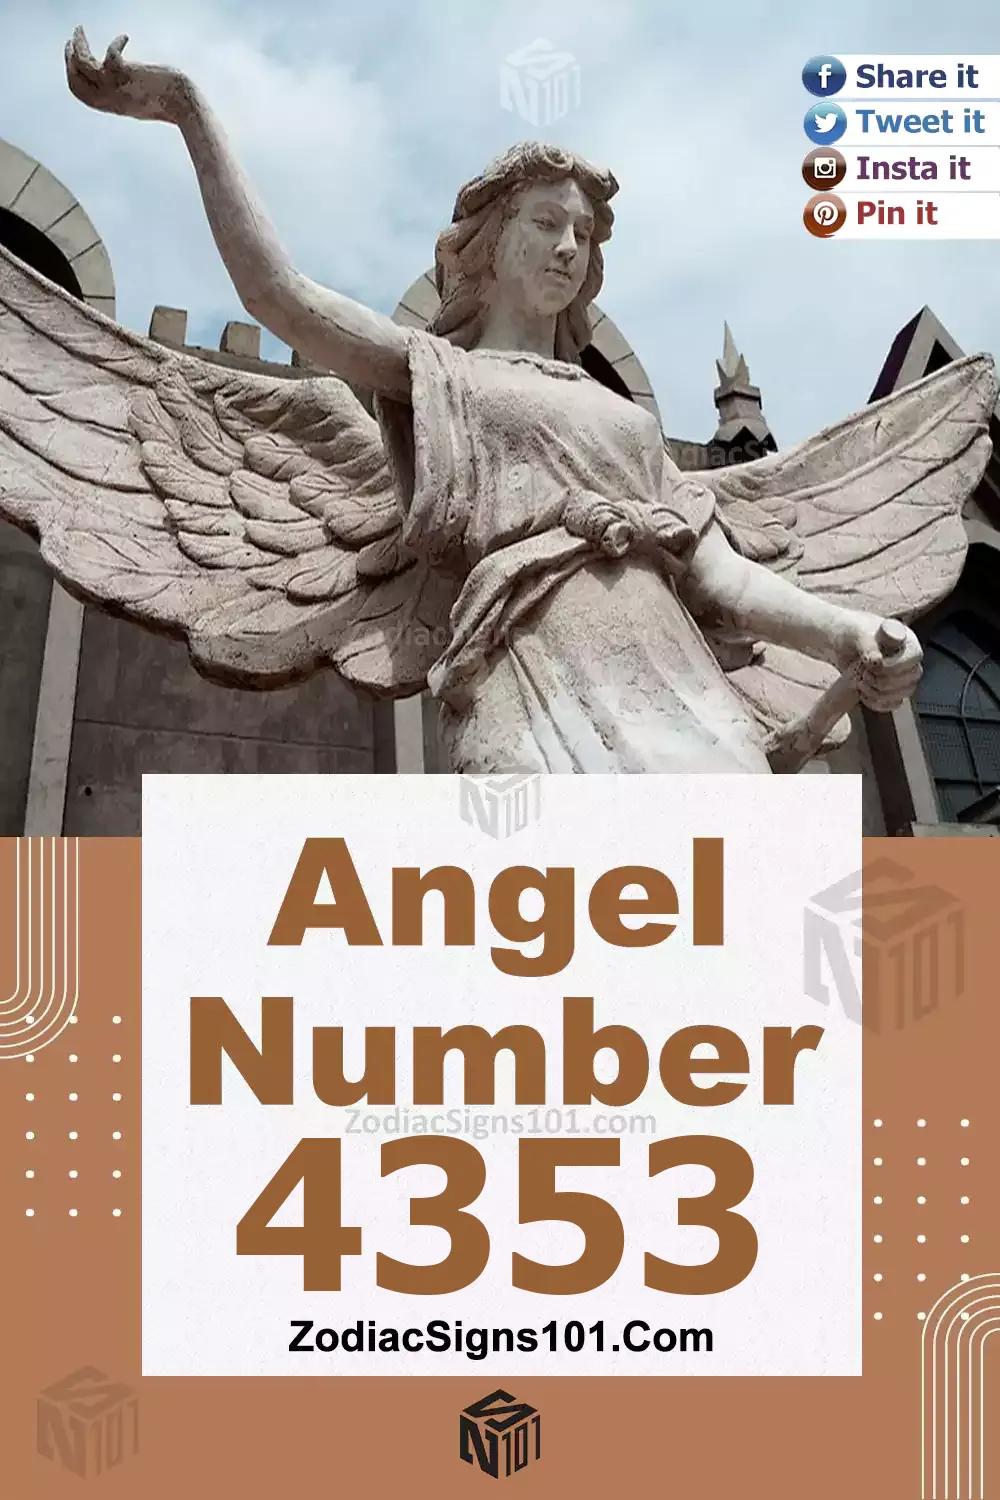 4353-Angel-Number-Meaning.jpg